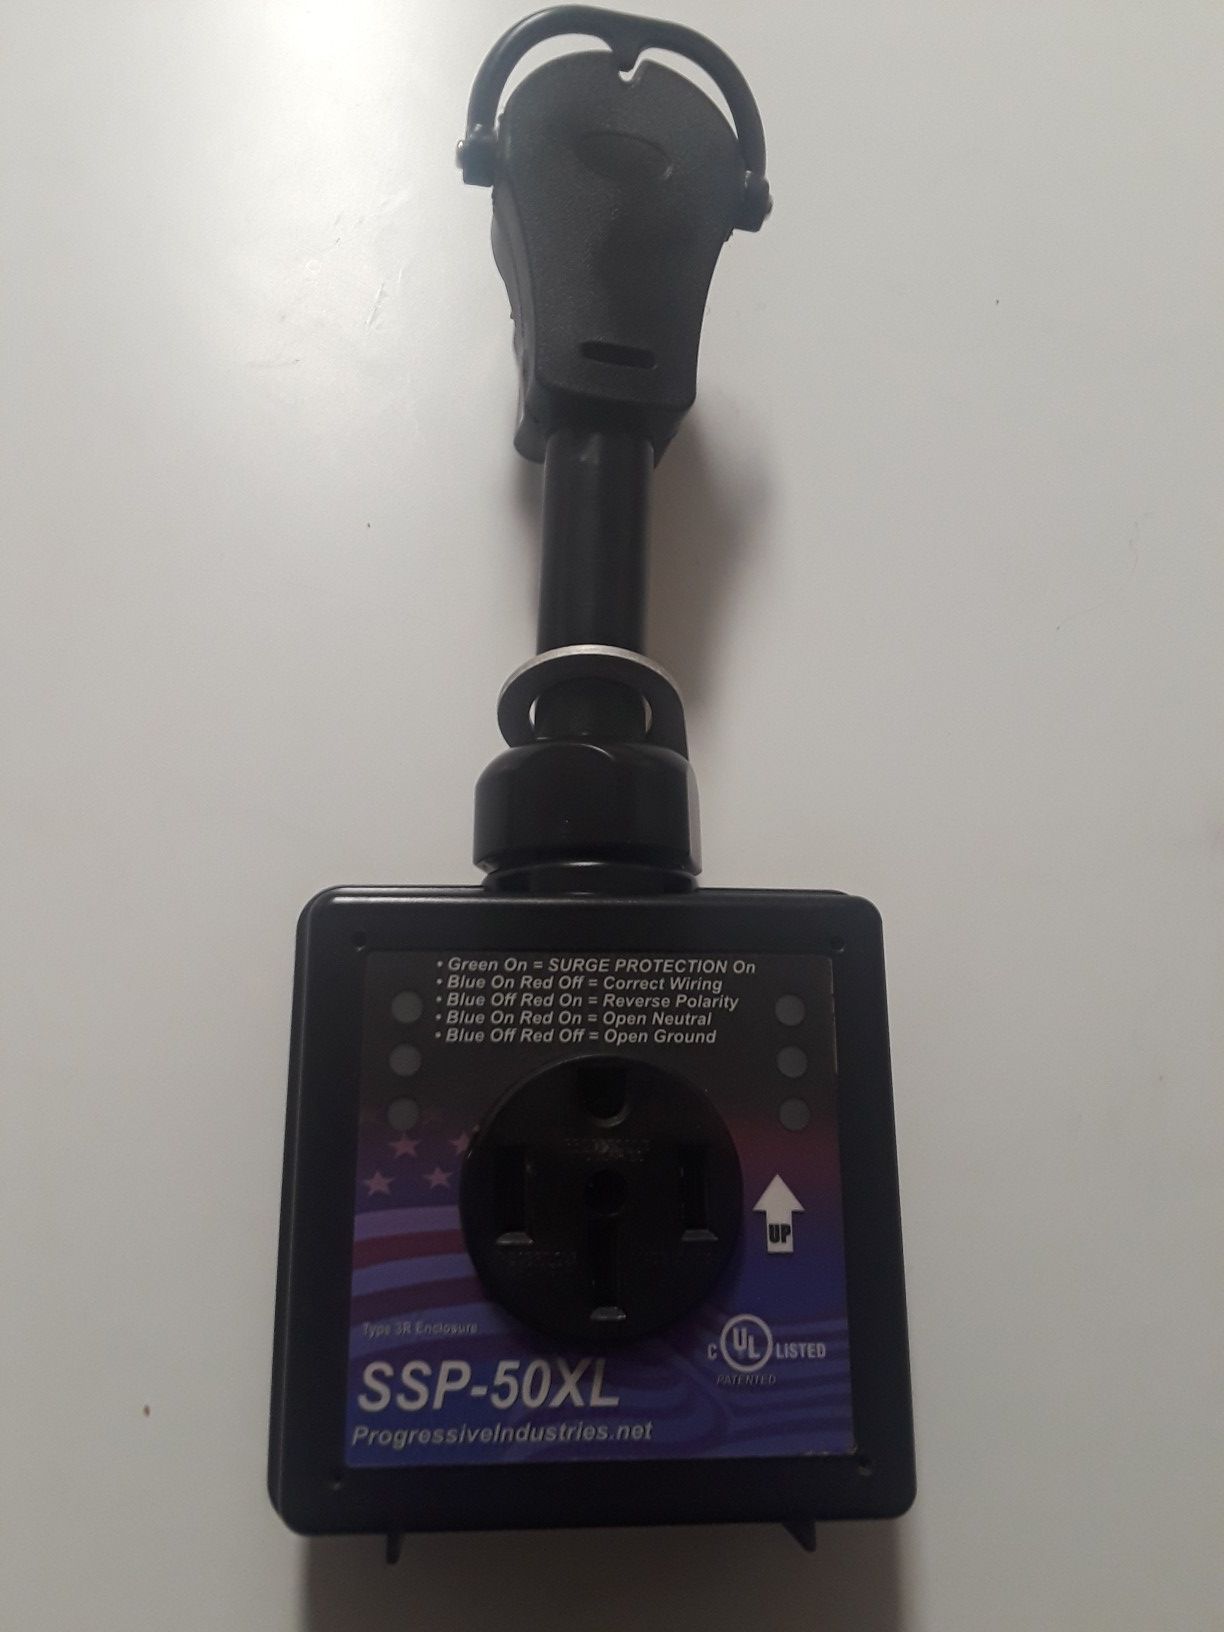 50 amp SSP- 50XL RV surge protector